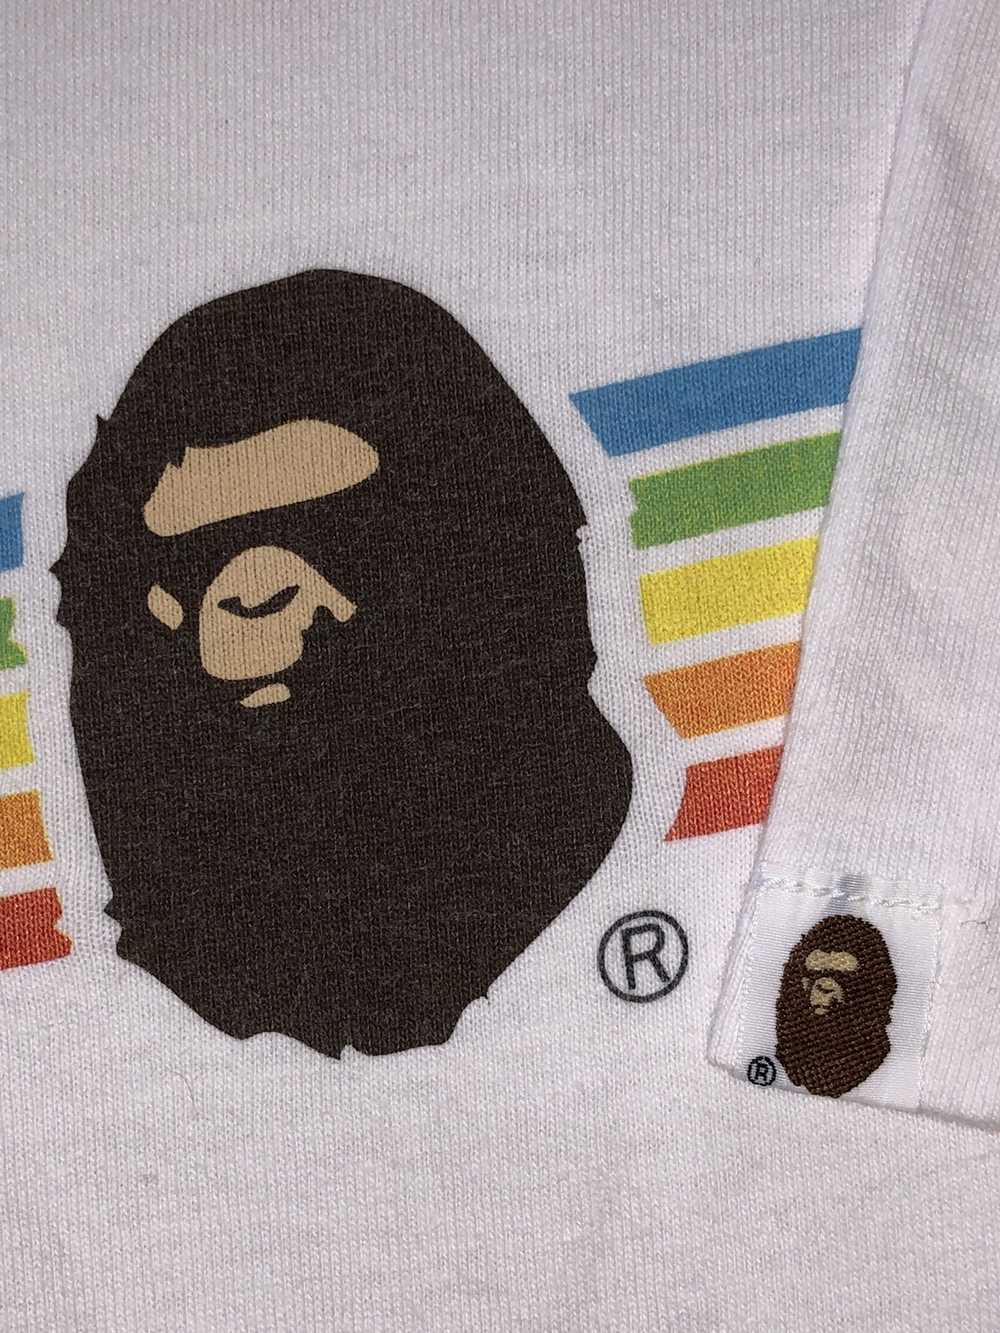 Bape Og Vintage 90s A Bathing Ape Rainbow Tshirts - image 3